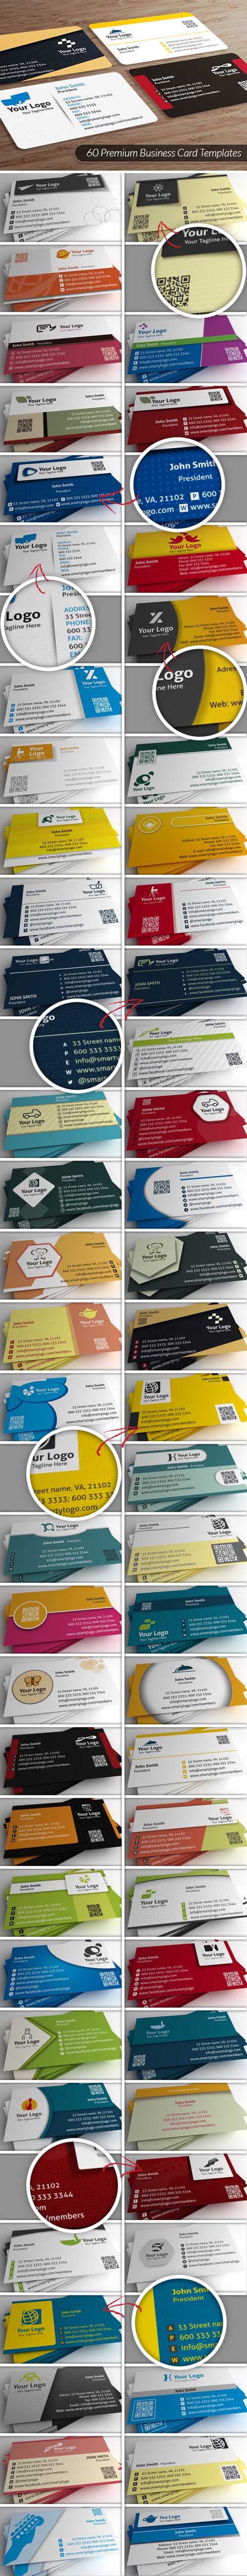 60 Fully Customizable Business Cards PSD Templates